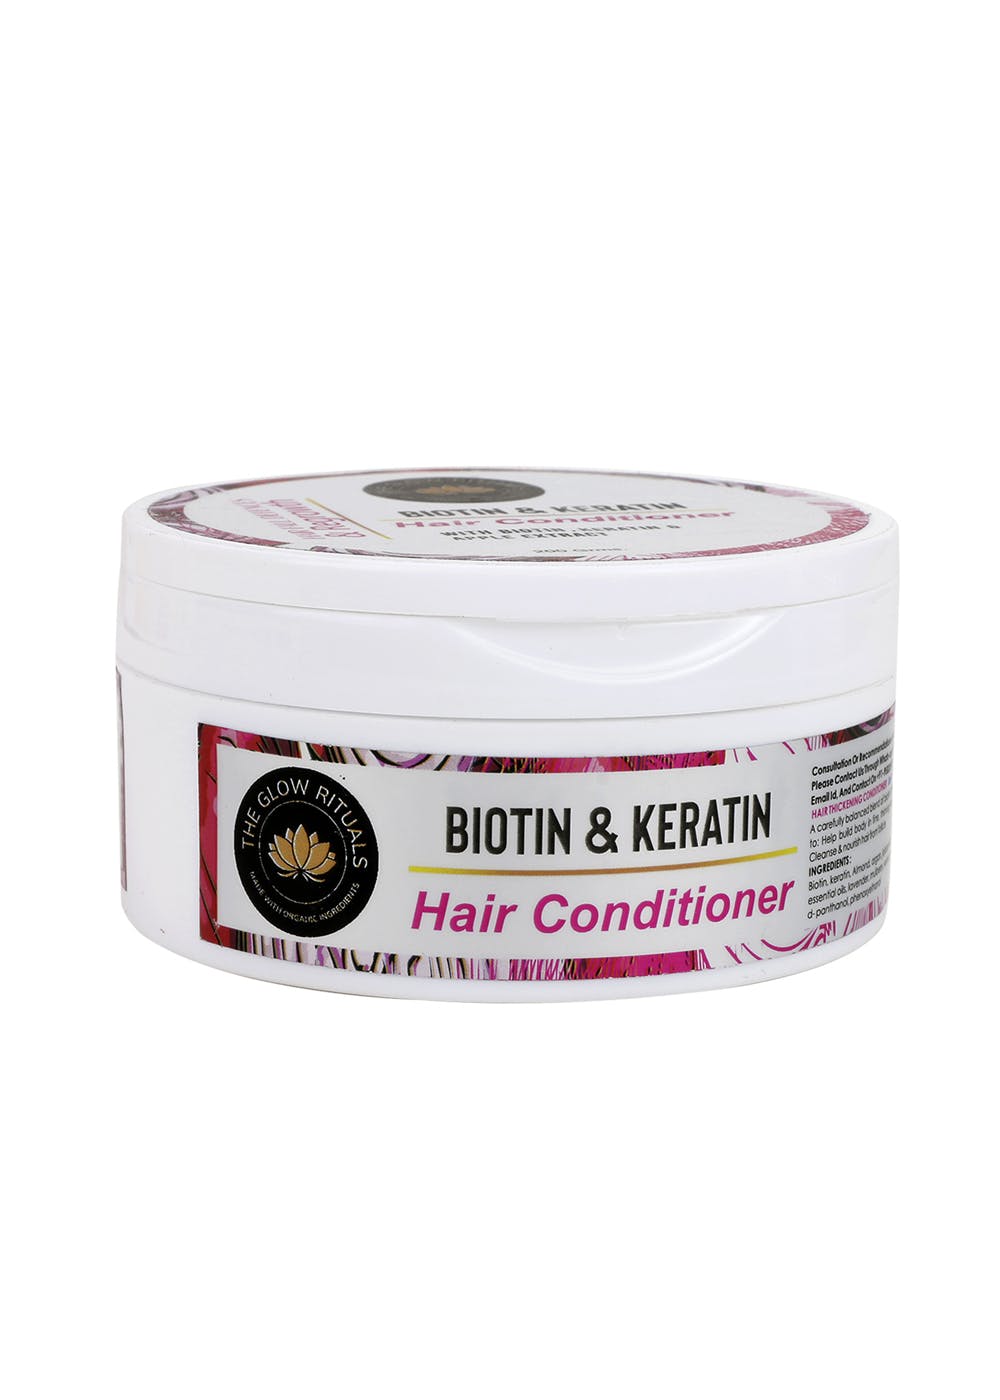 Biotin & Keratin Hair Conditioner (200g)